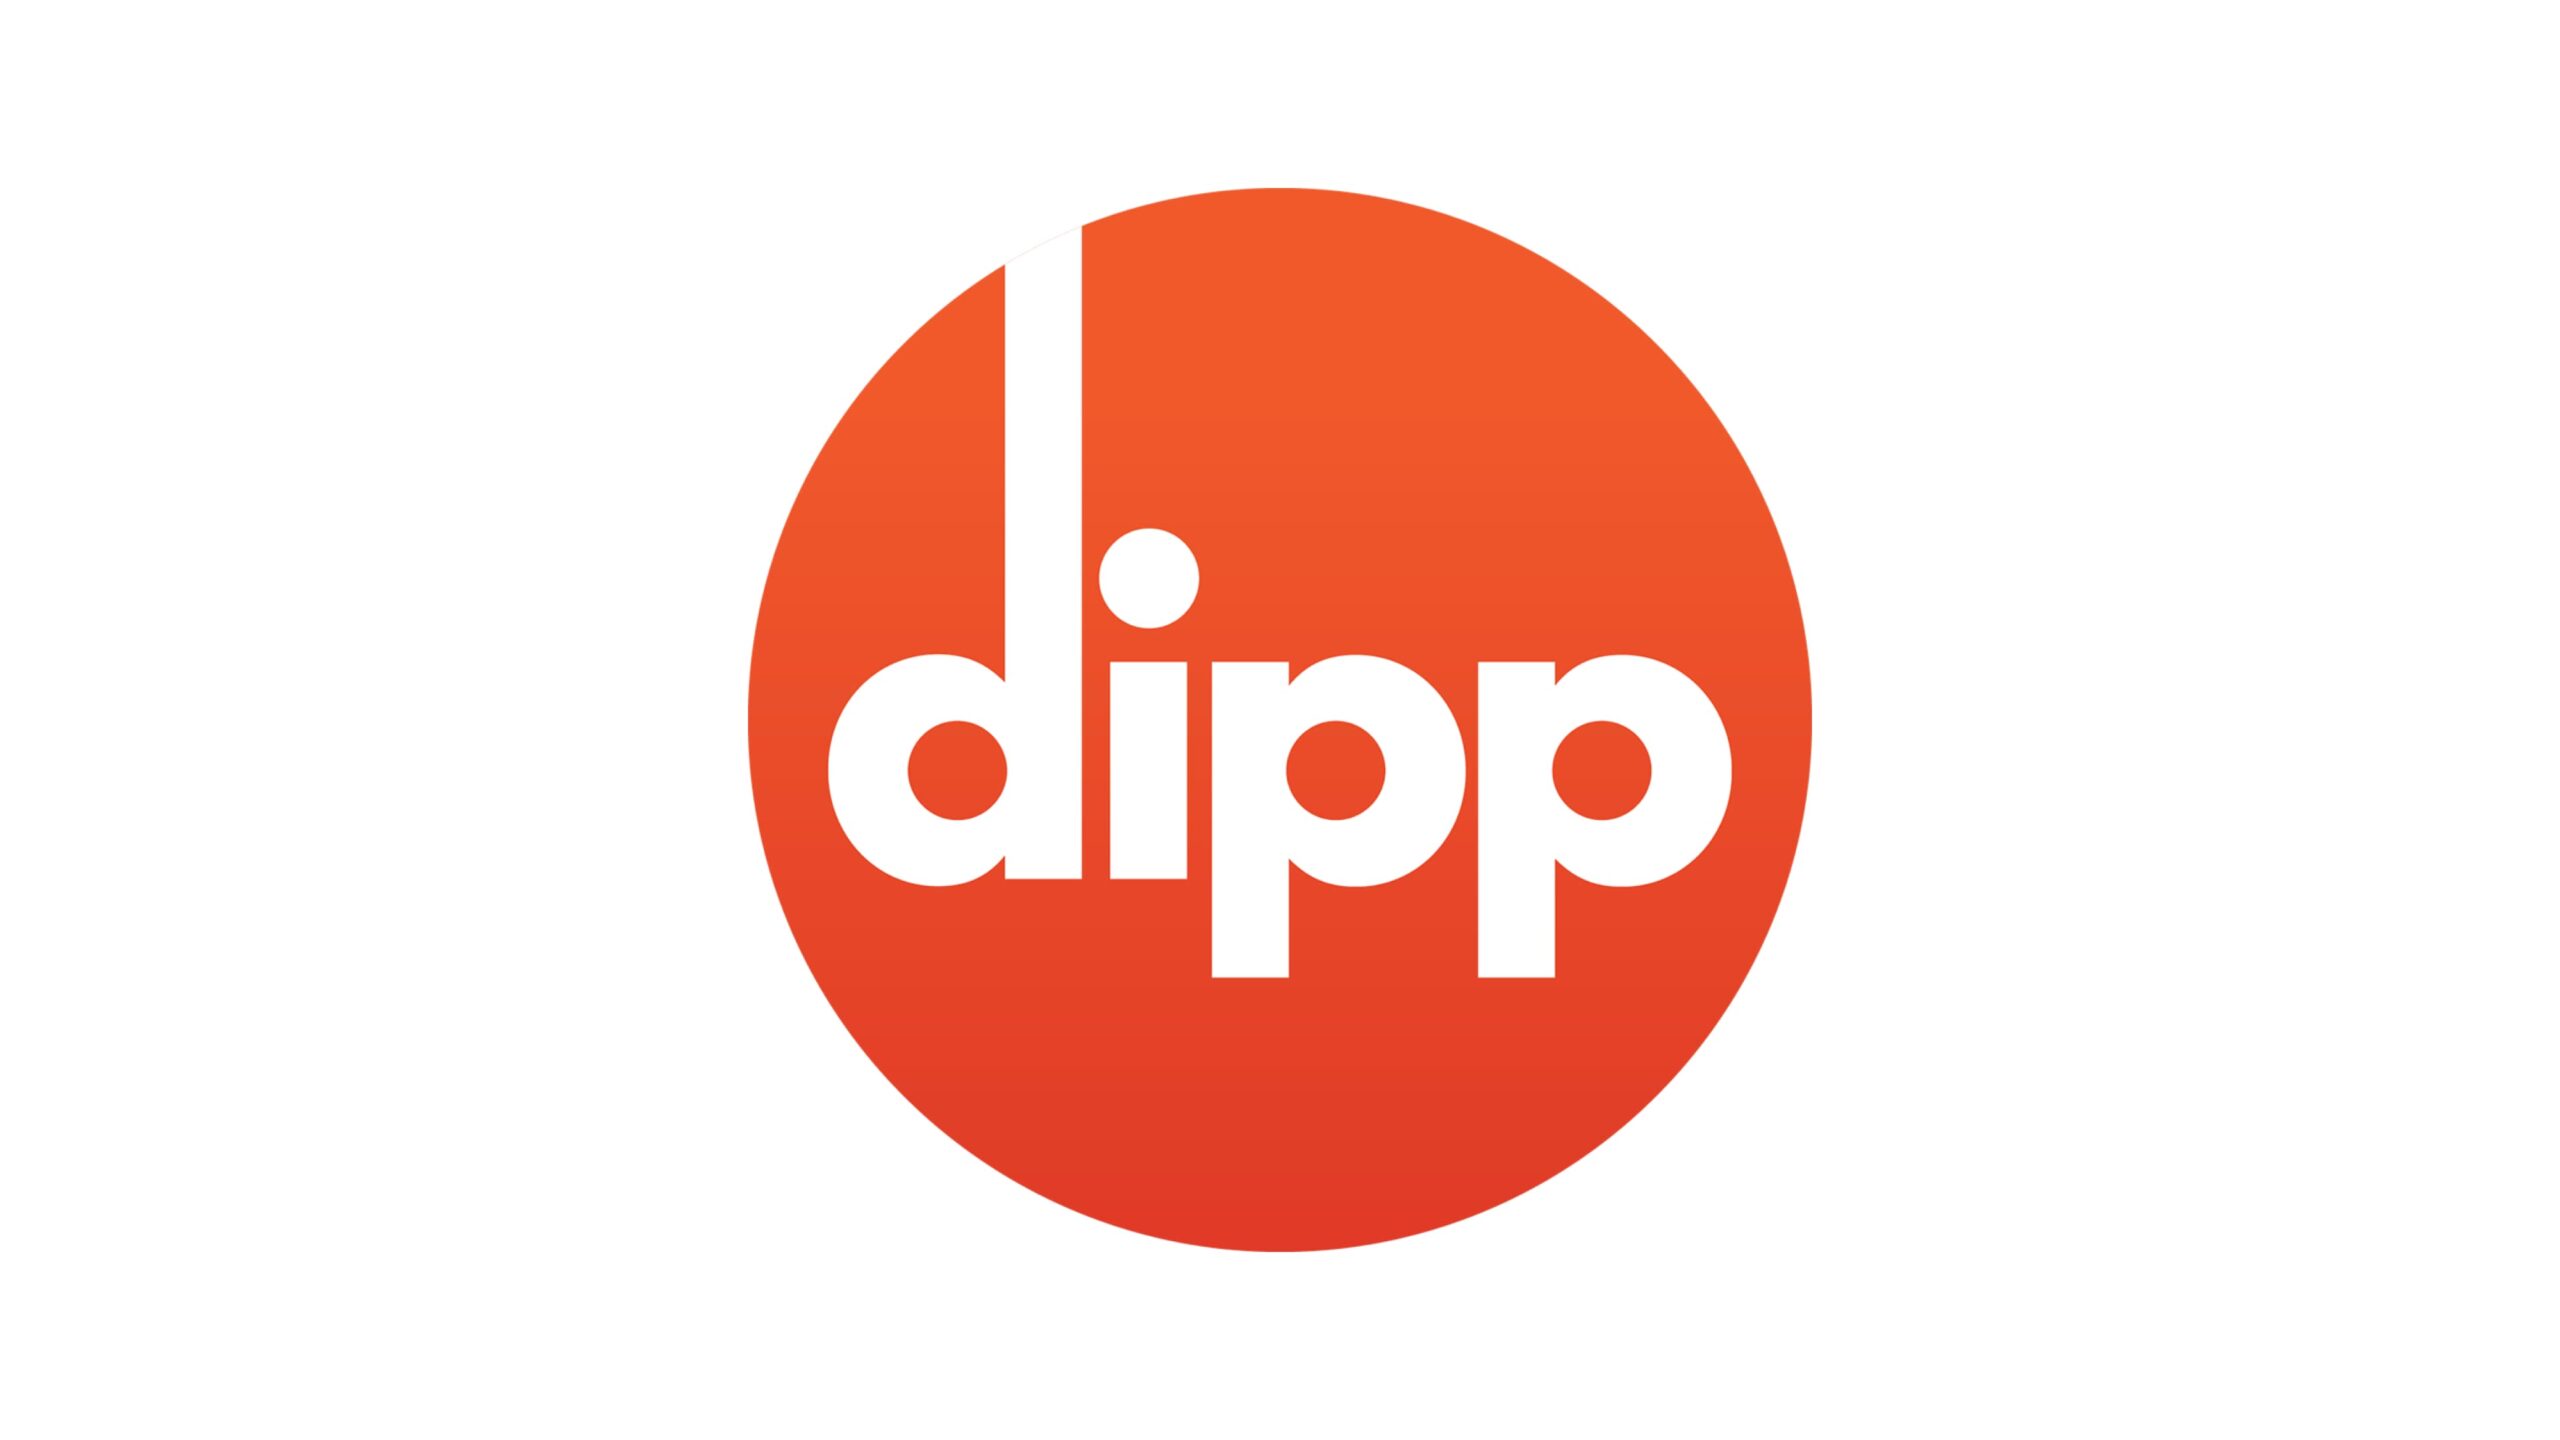 EC事業者向け運用支援プラットフォーム「dipp」が2.3億円をシード調達